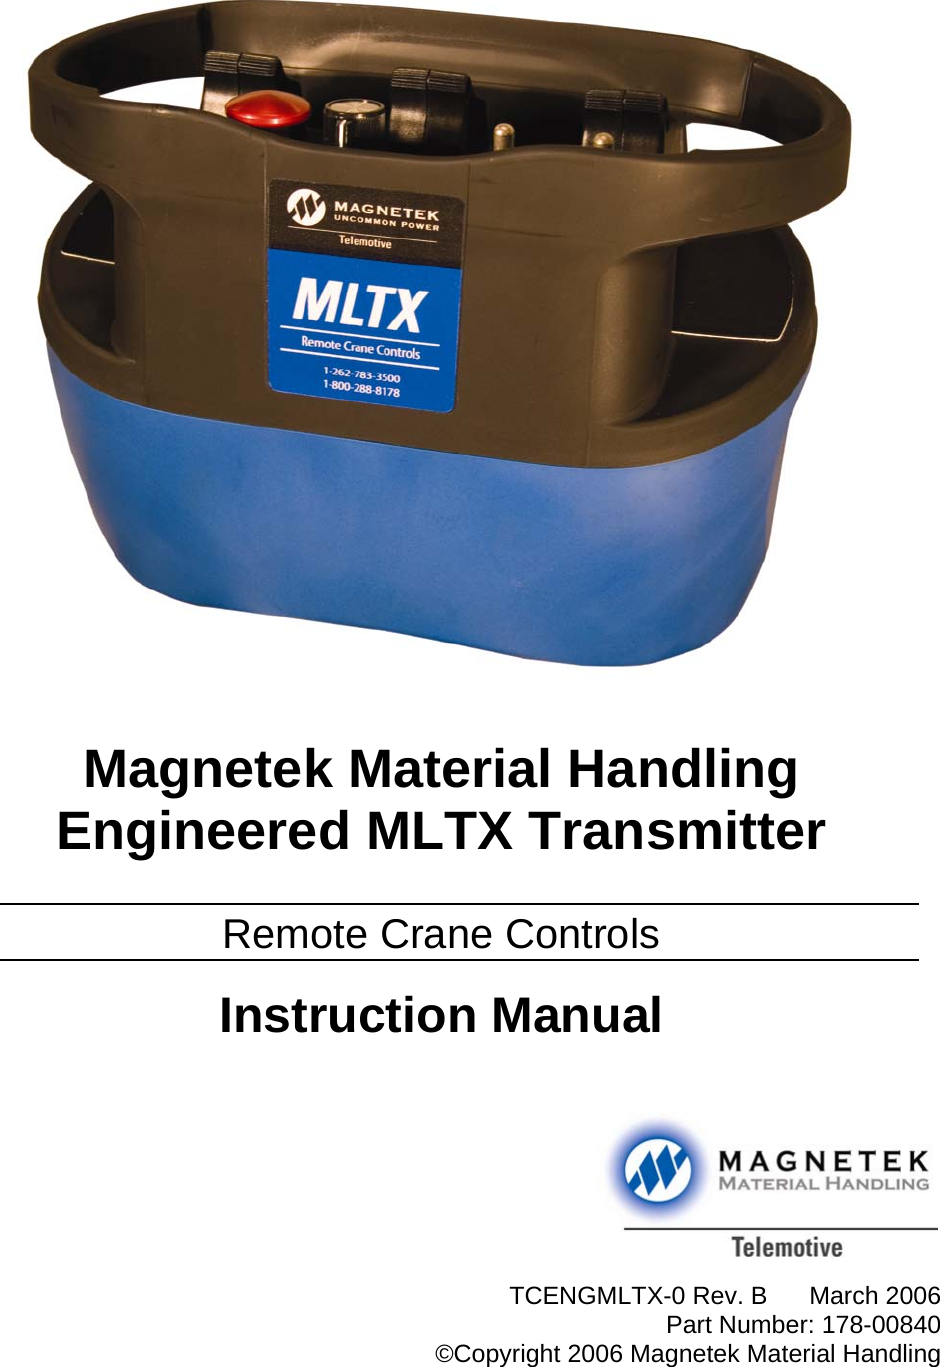                            Magnetek Material Handling Engineered MLTX Transmitter  Remote Crane Controls  Instruction Manual           TCENGMLTX-0 Rev. B  March 2006Part Number: 178-00840©Copyright 2006 Magnetek Material Handling